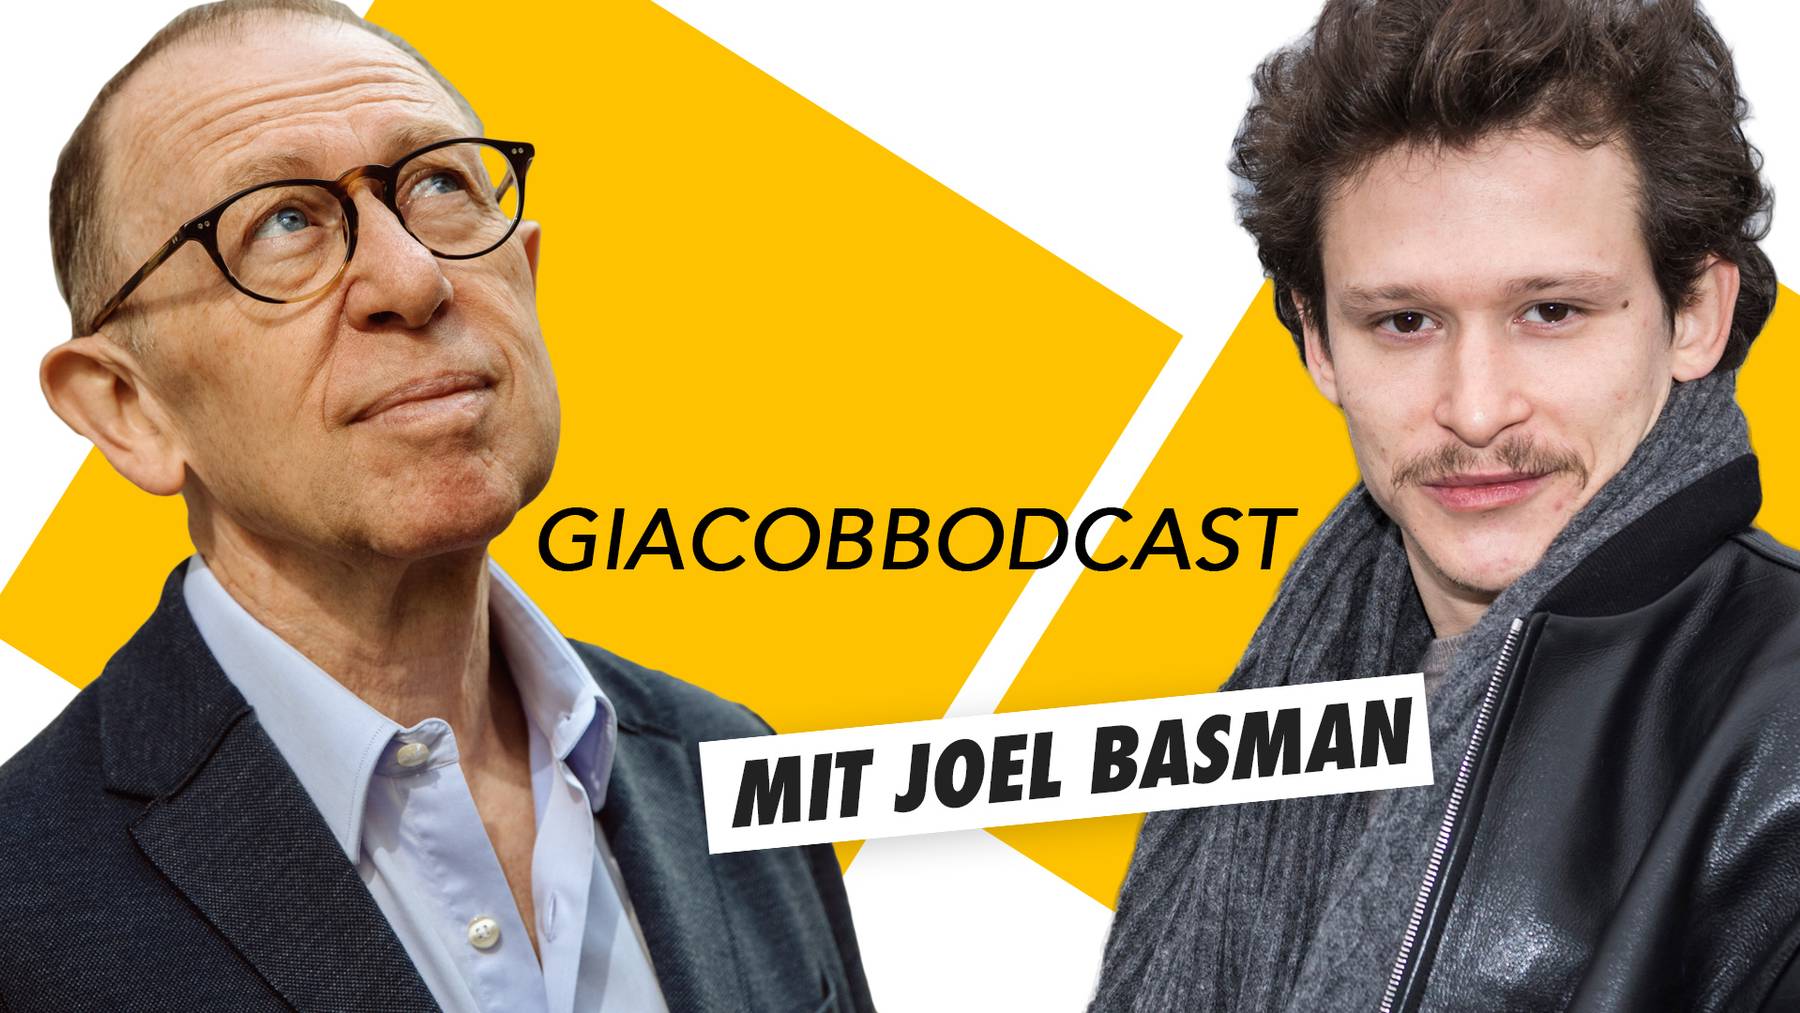 Giacobbodcast mit Joel Basman